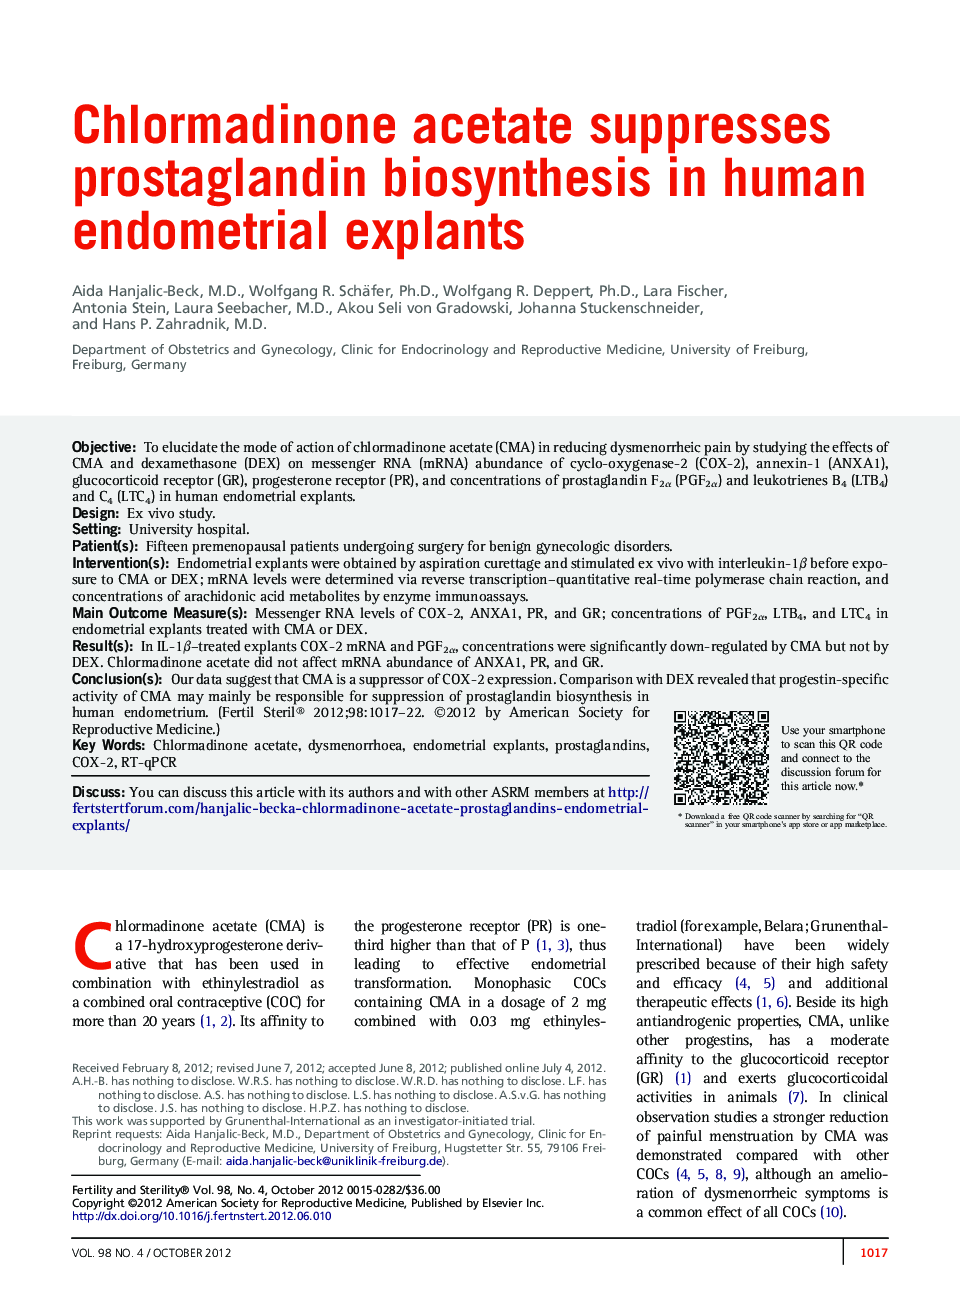 Chlormadinone acetate suppresses prostaglandin biosynthesis in human endometrial explants 